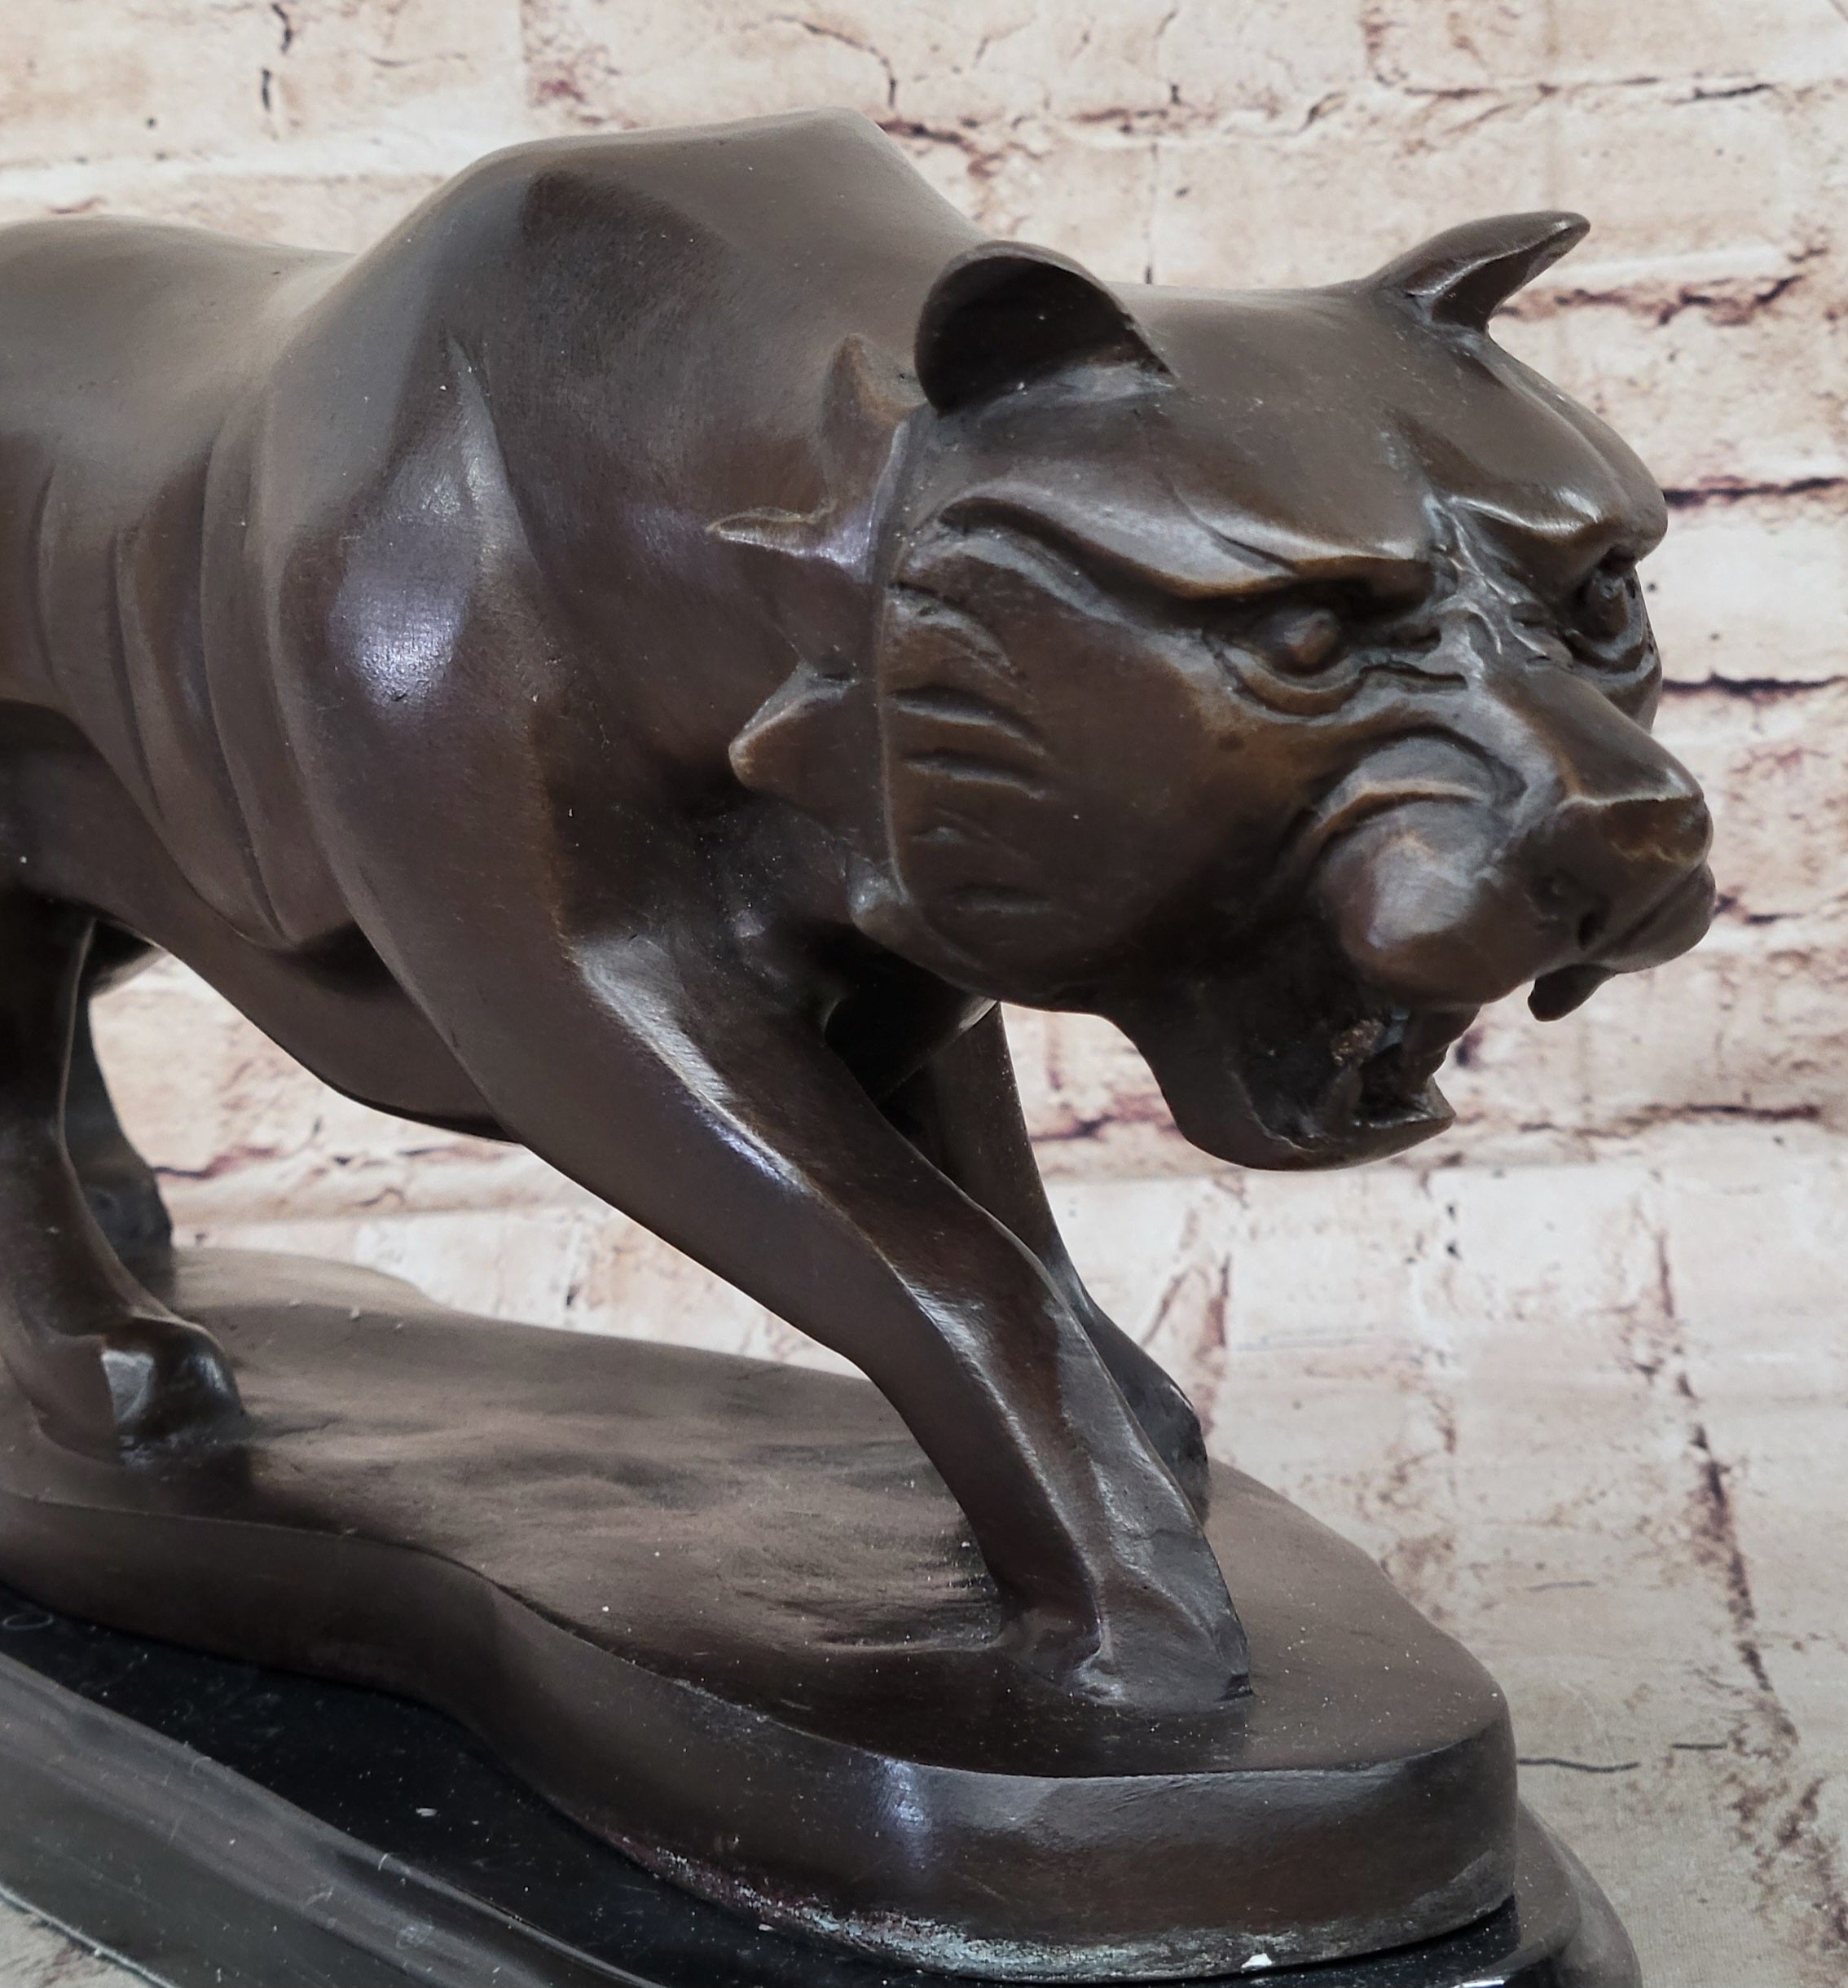 Wildlife Animal Tiger Bronze Sculpture Abstract Modern Henry Moore Tribute Art